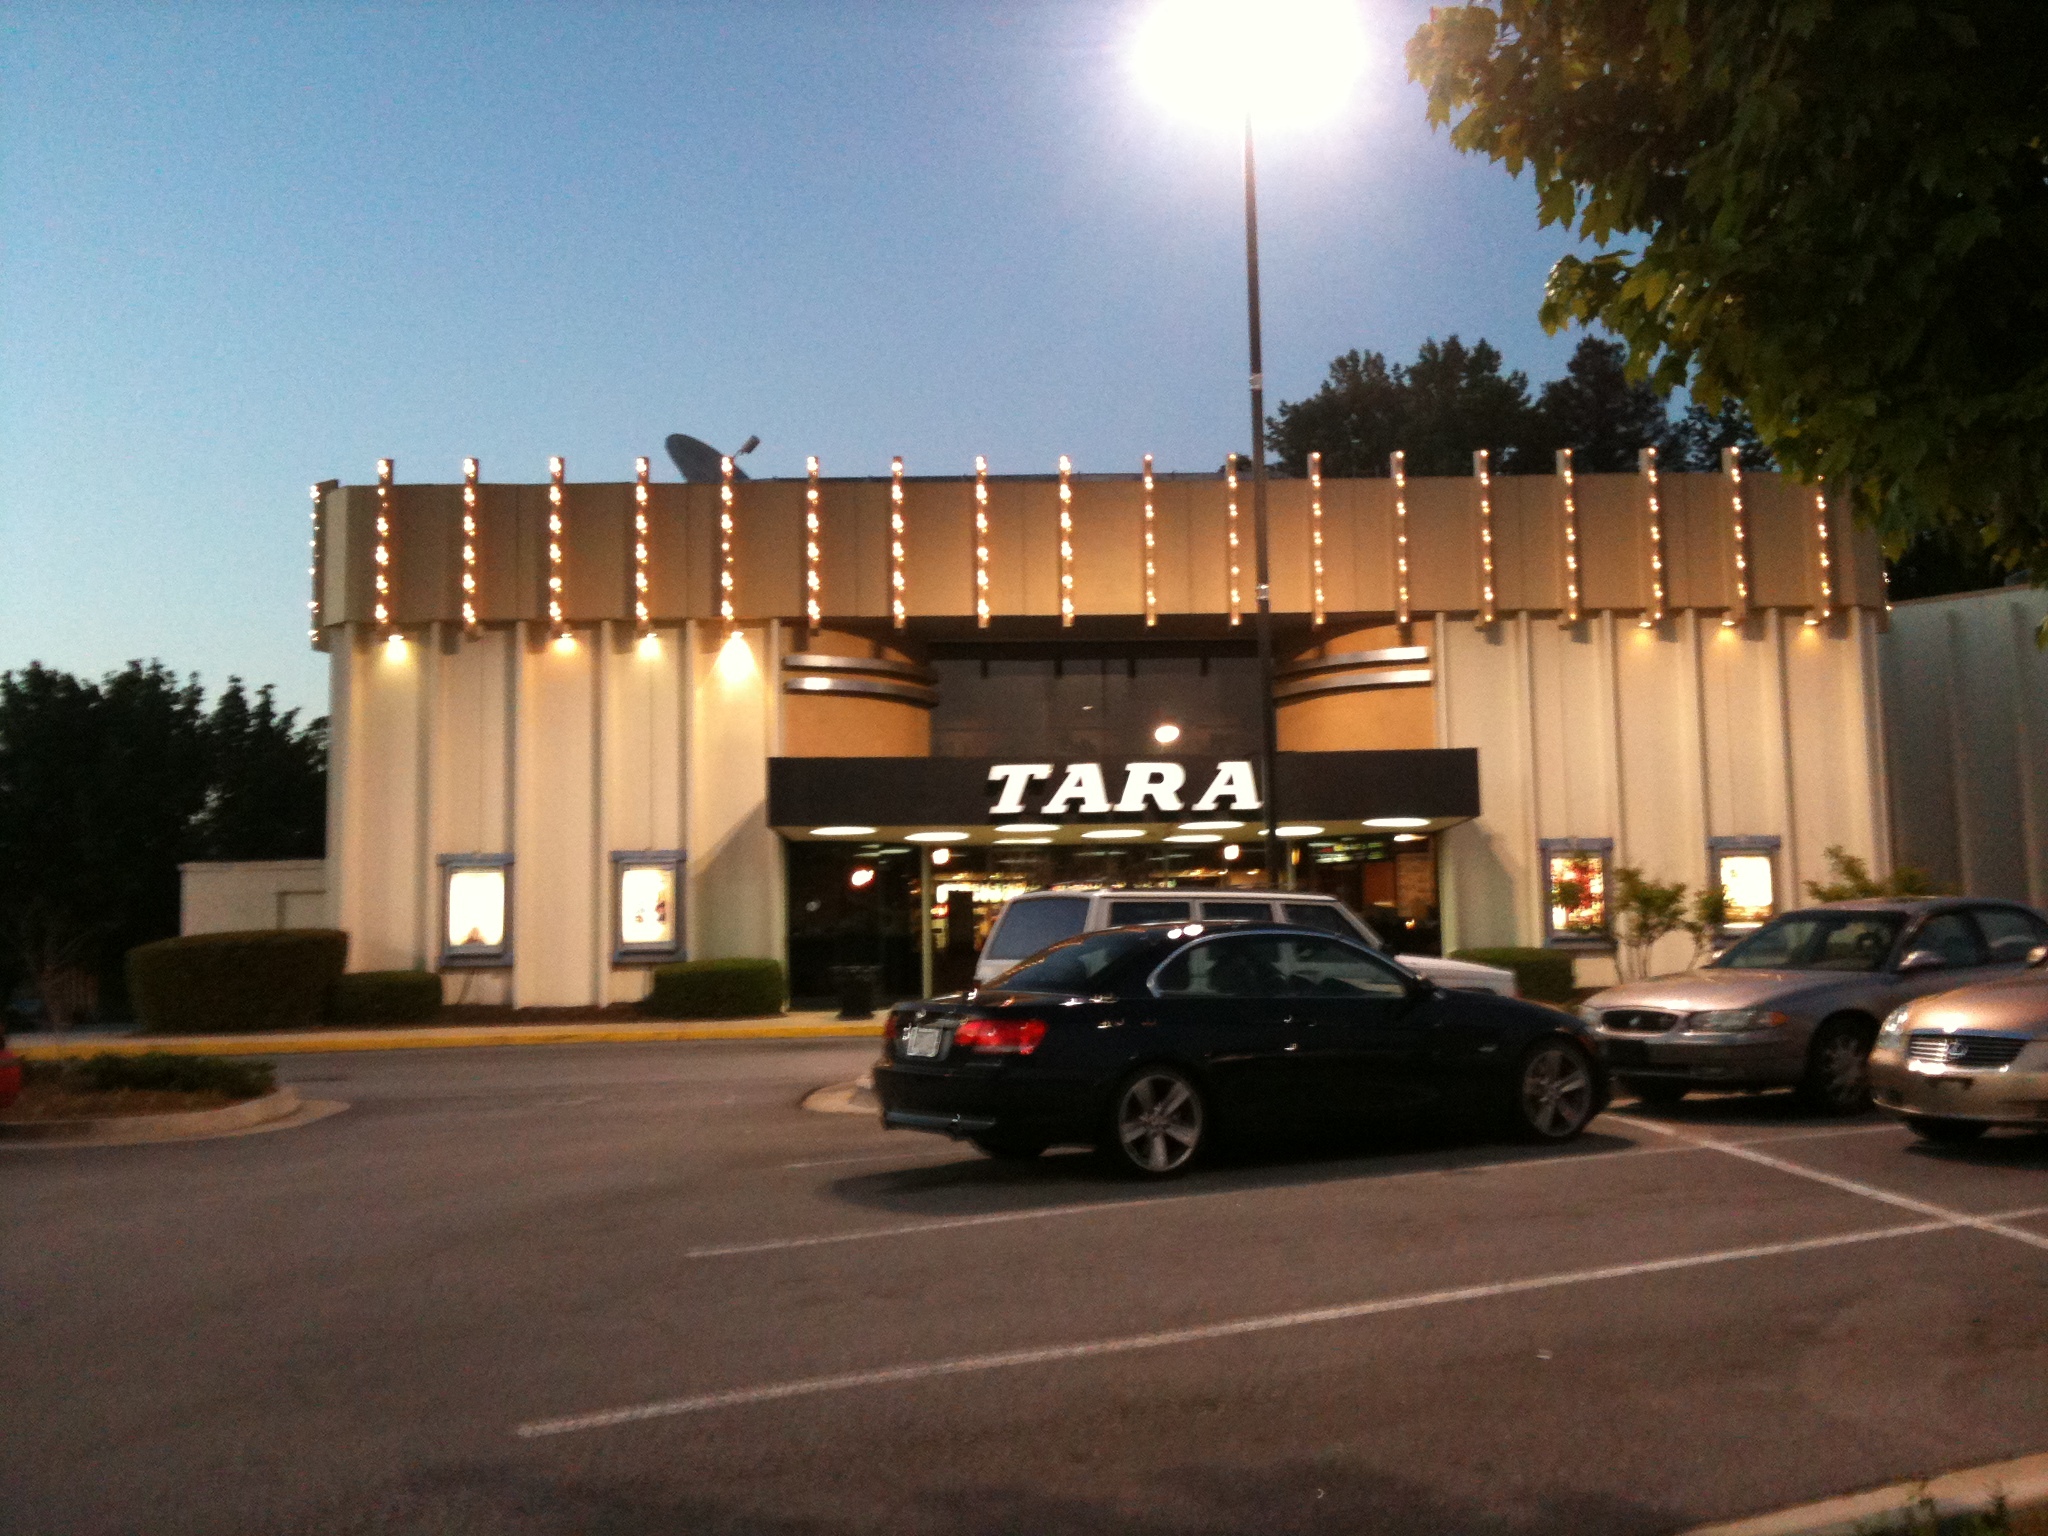 Tara Theatre - Wikipedia